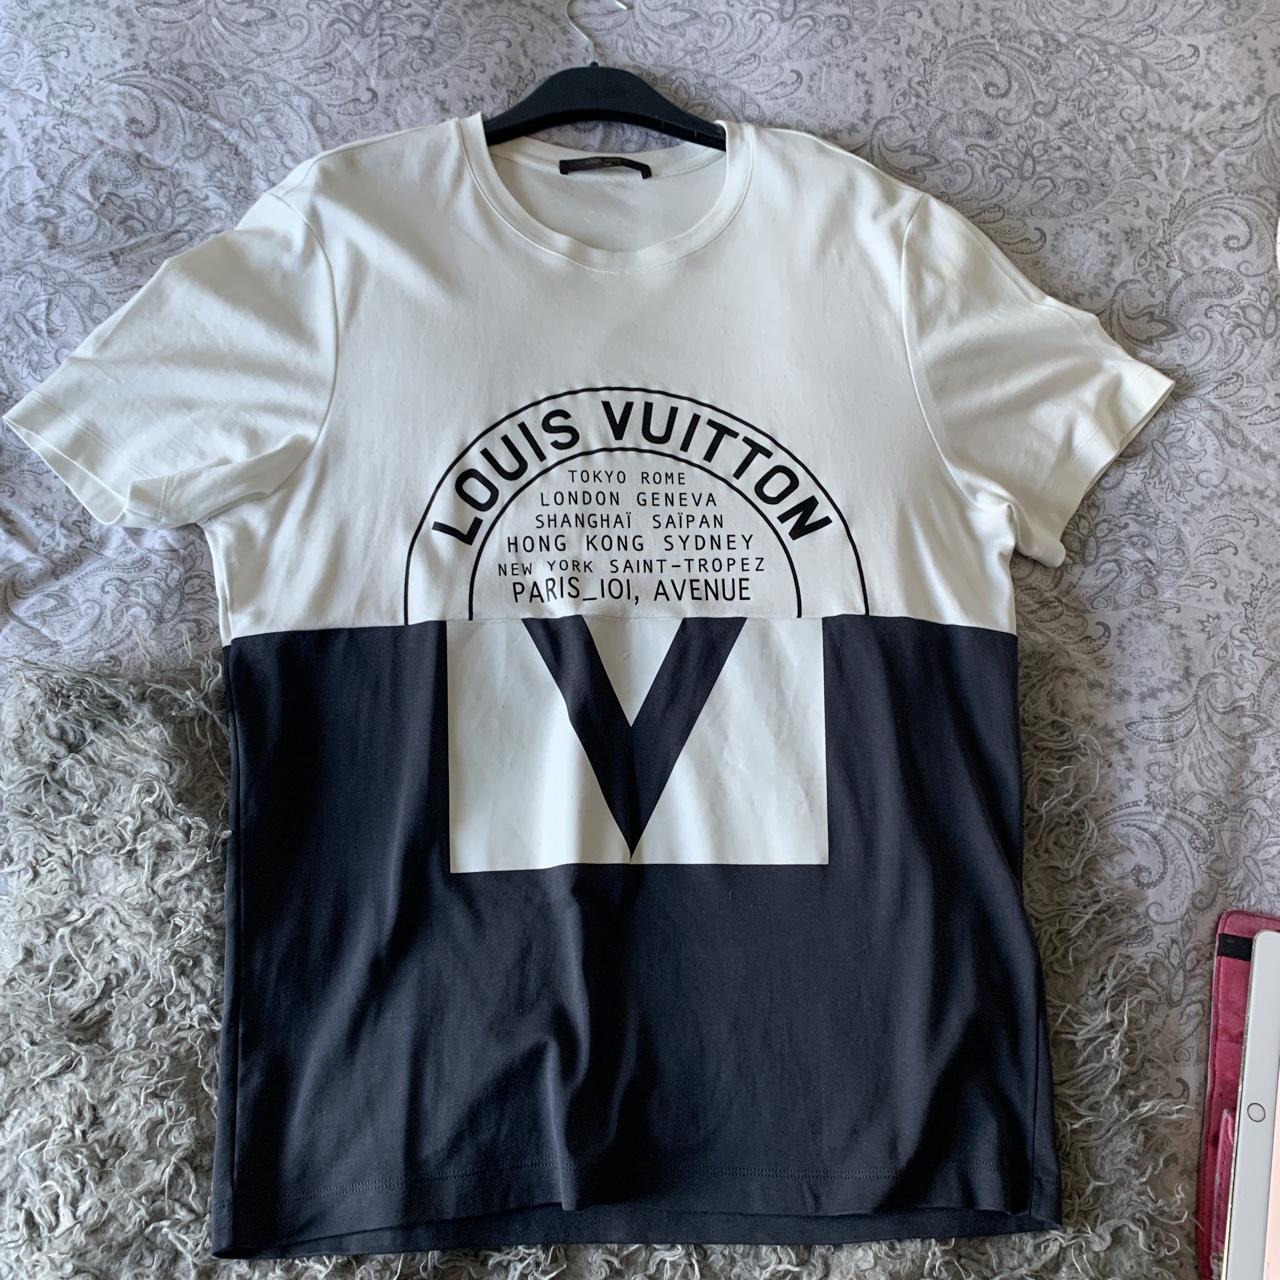 Louis Vuitton Men's T-shirt